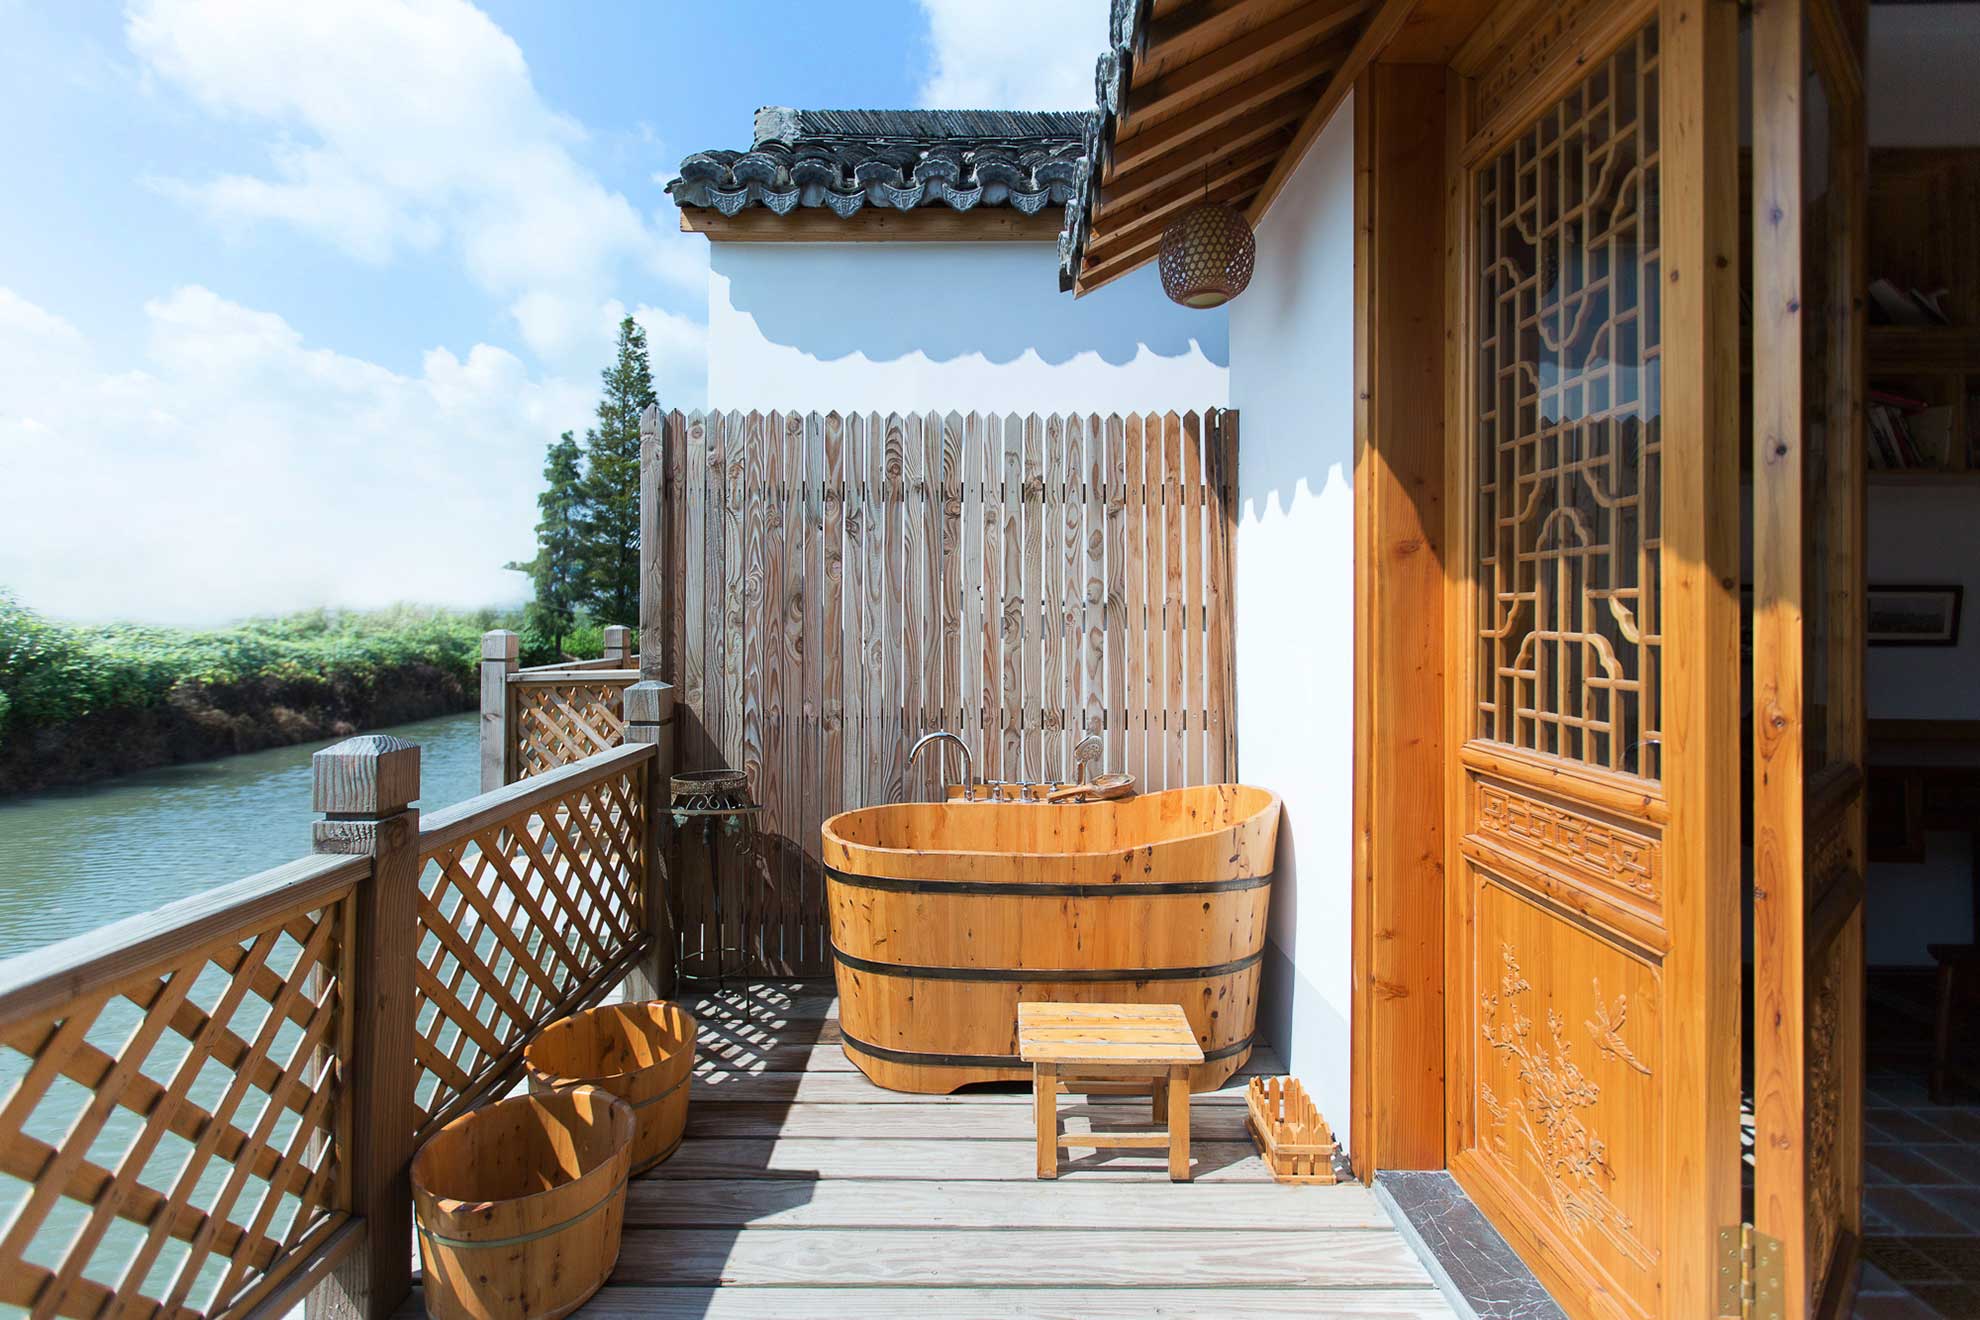 Airbnb listing with outdoor bath tub